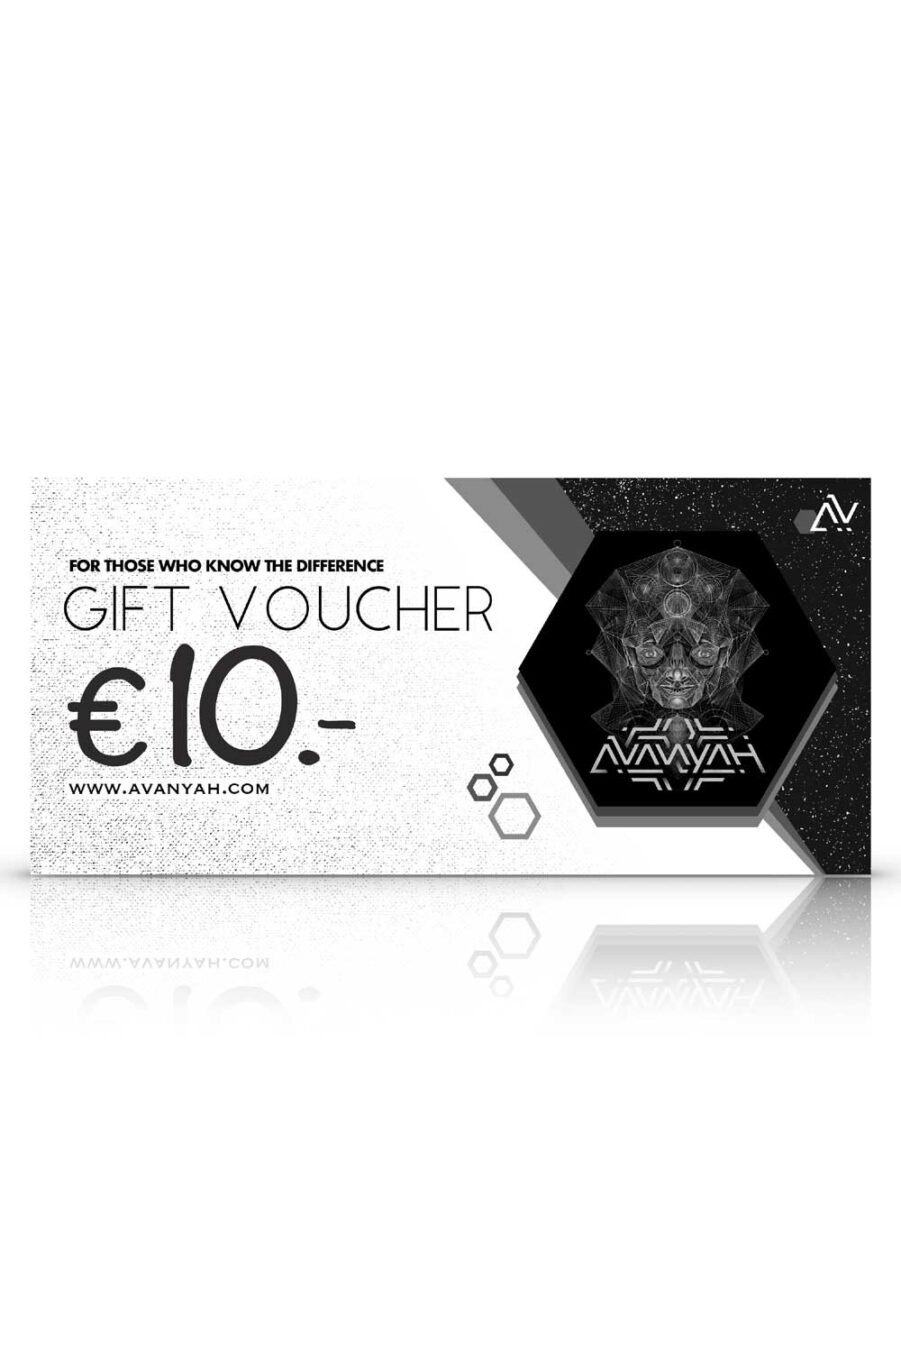 10 € Gift card in Avanyah's online fashion store